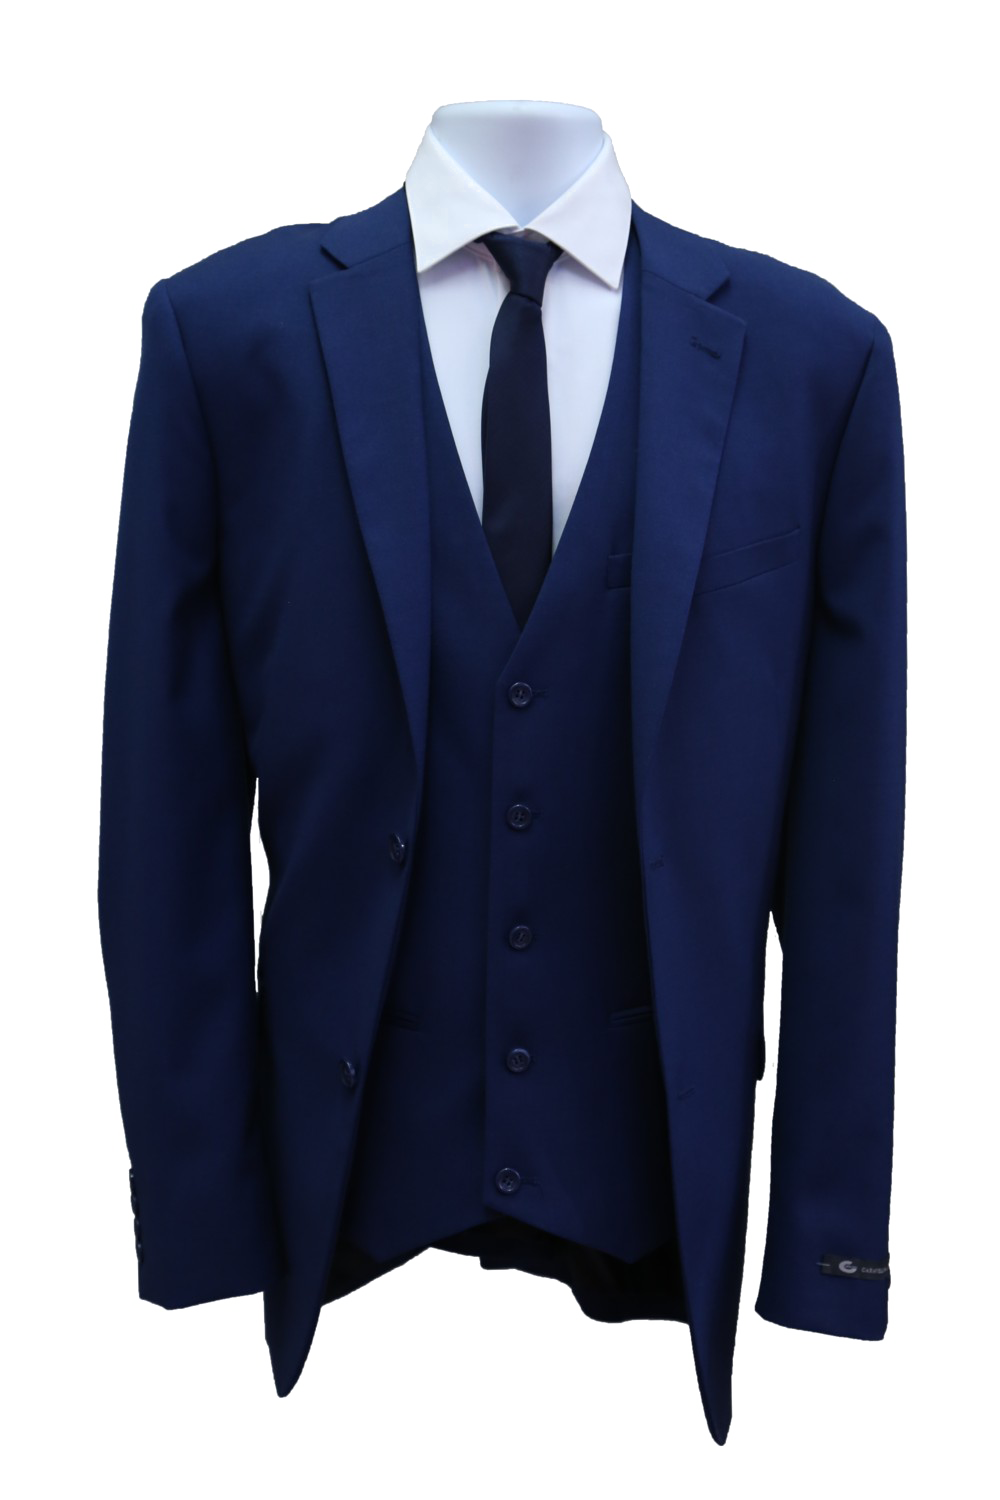 Blue Suit PNG Image Background